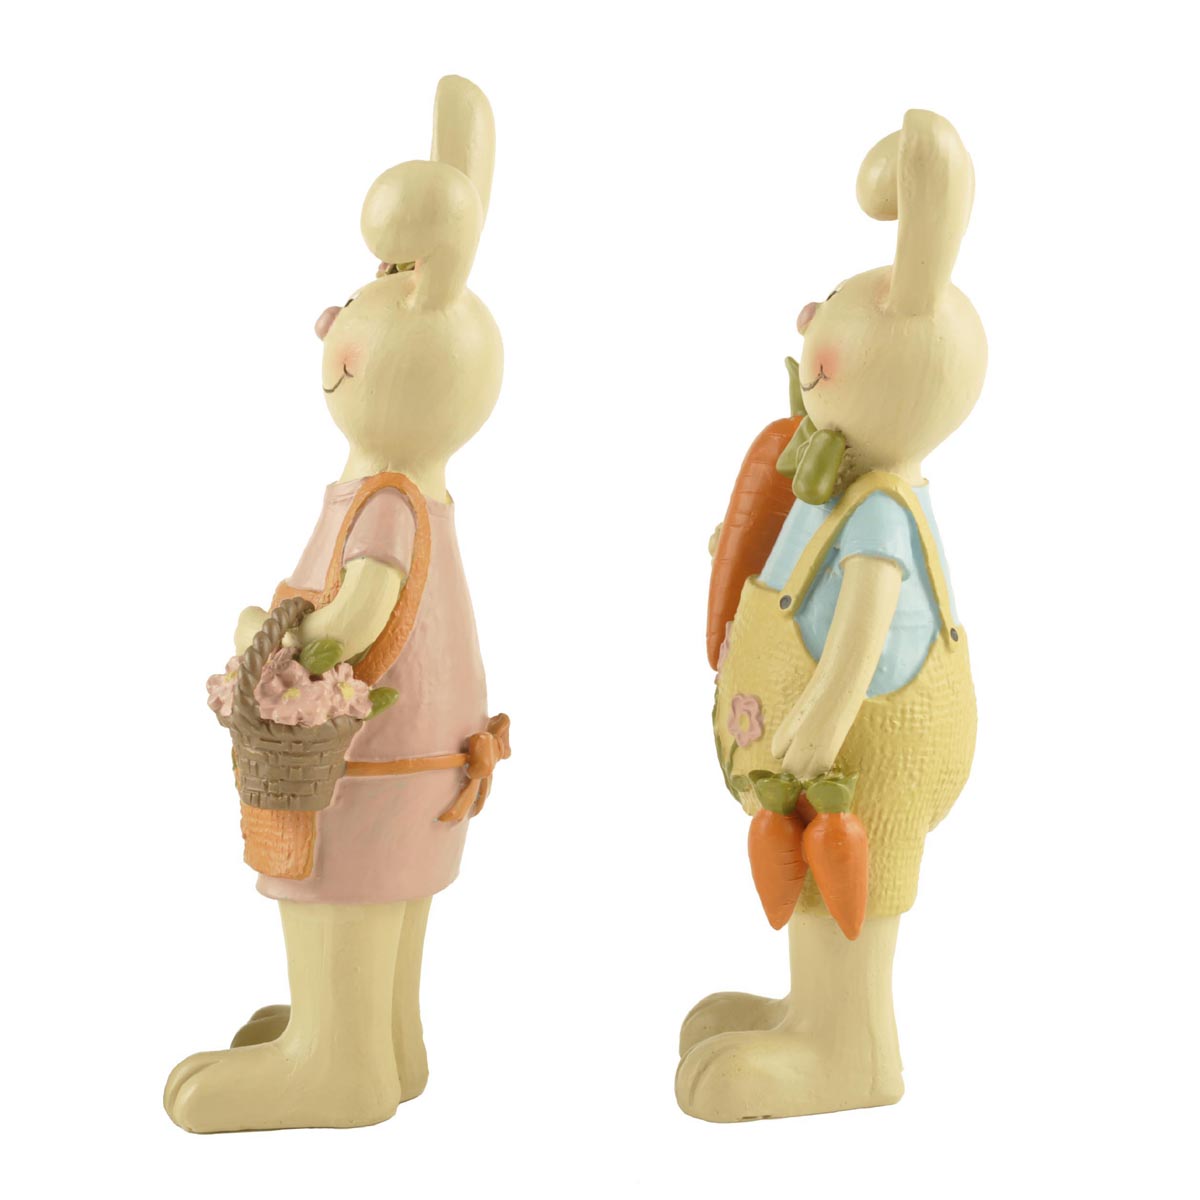 Ennas easter figurines handmade crafts home decor-1